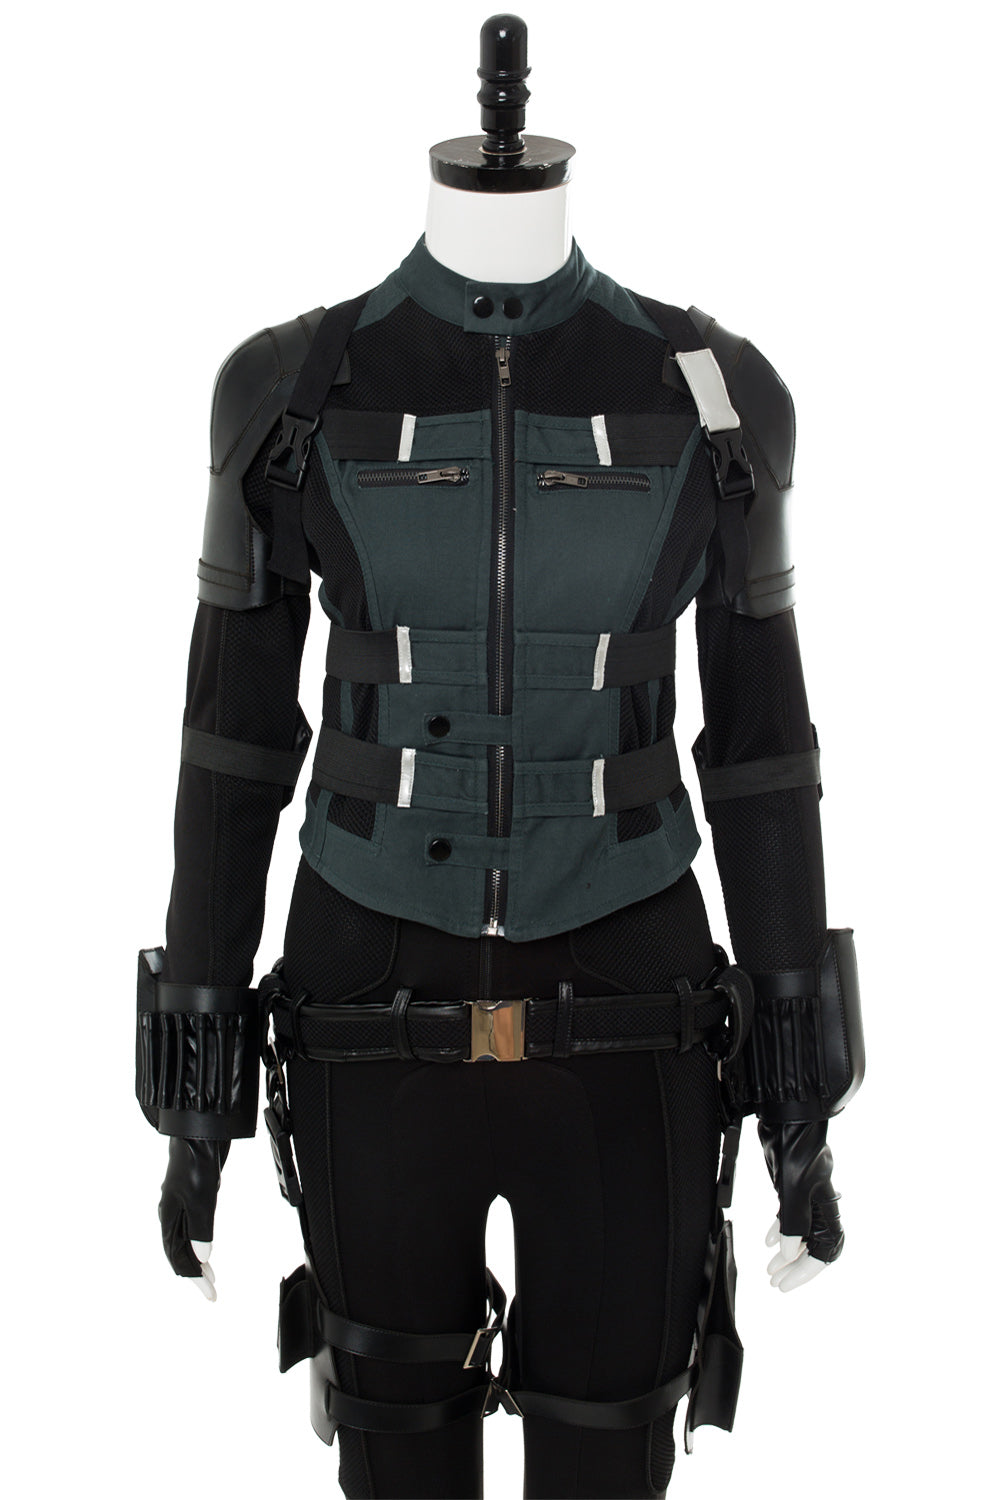 Avengers: Infinity War Natasha Romanoff alias Black Widow Cosplay Kostüm